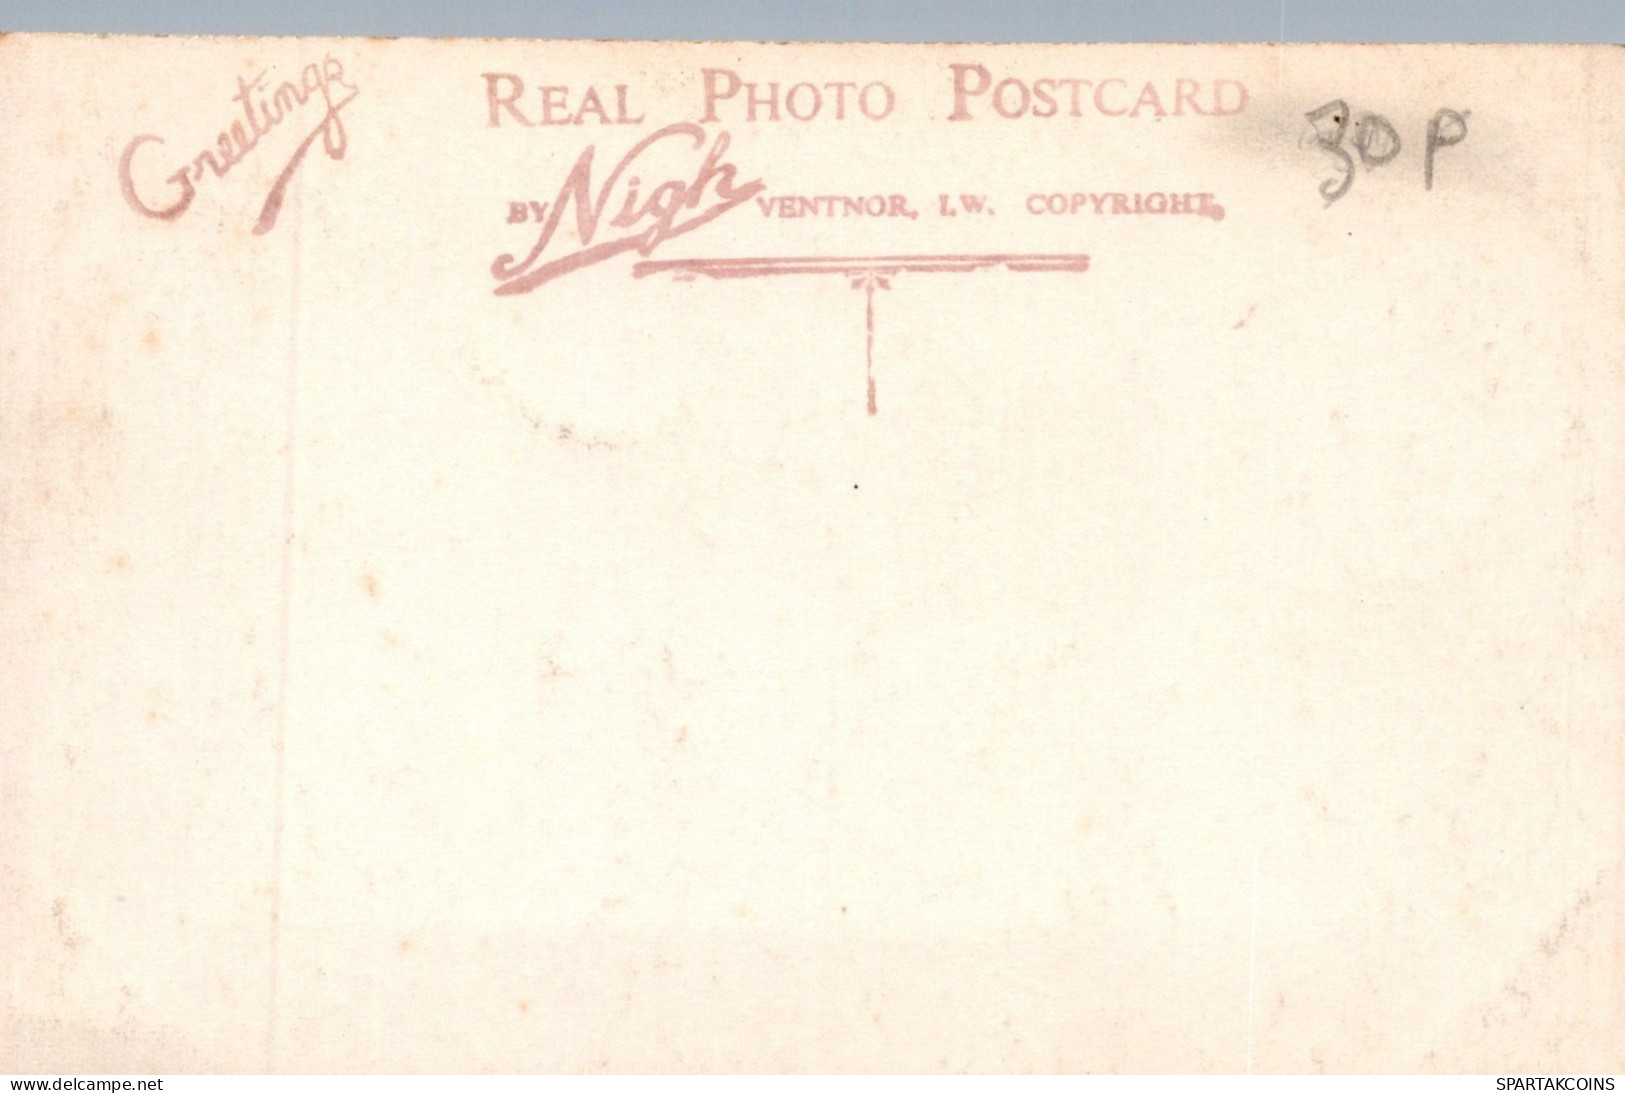 BURRO Animales Vintage Antiguo CPA Tarjeta Postal #PAA042.A - Burros